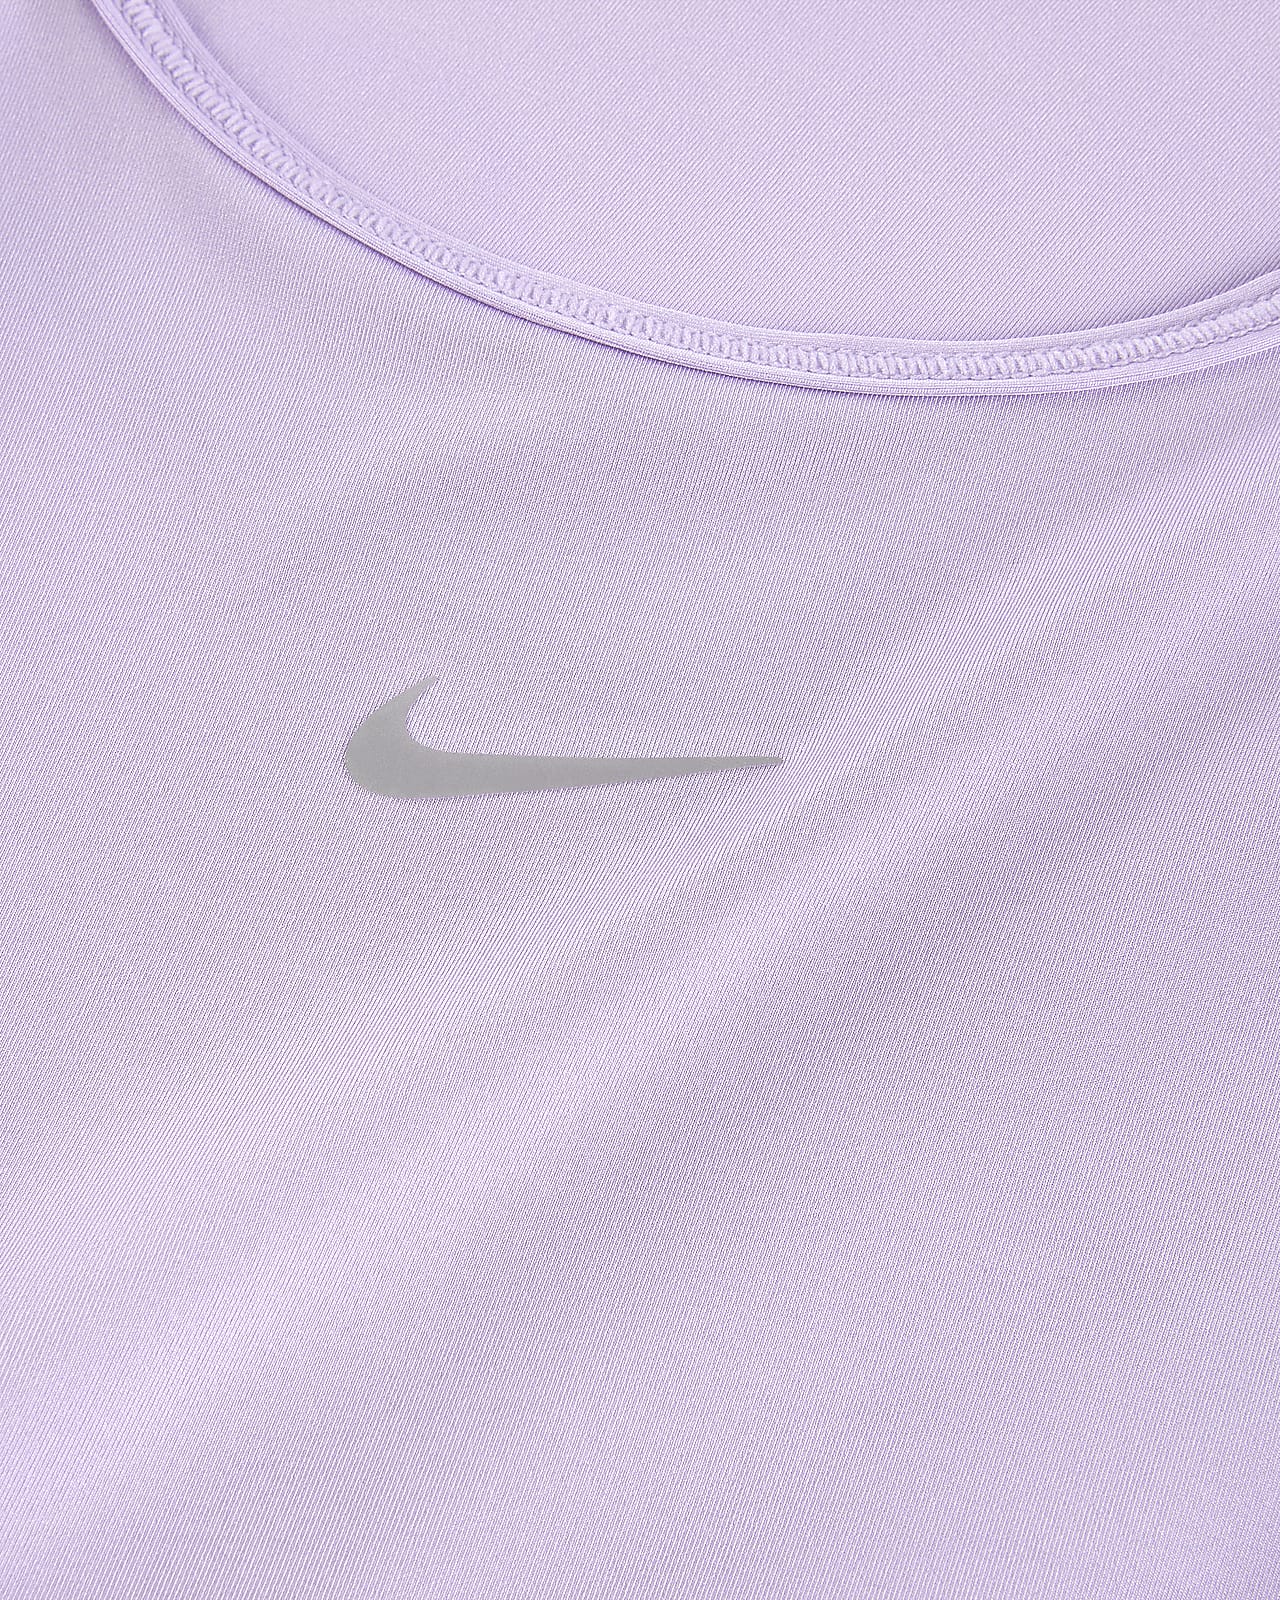 Nike Dri-FIT One Luxe Women's Twist Cropped Short-Sleeve Top. Nike CA